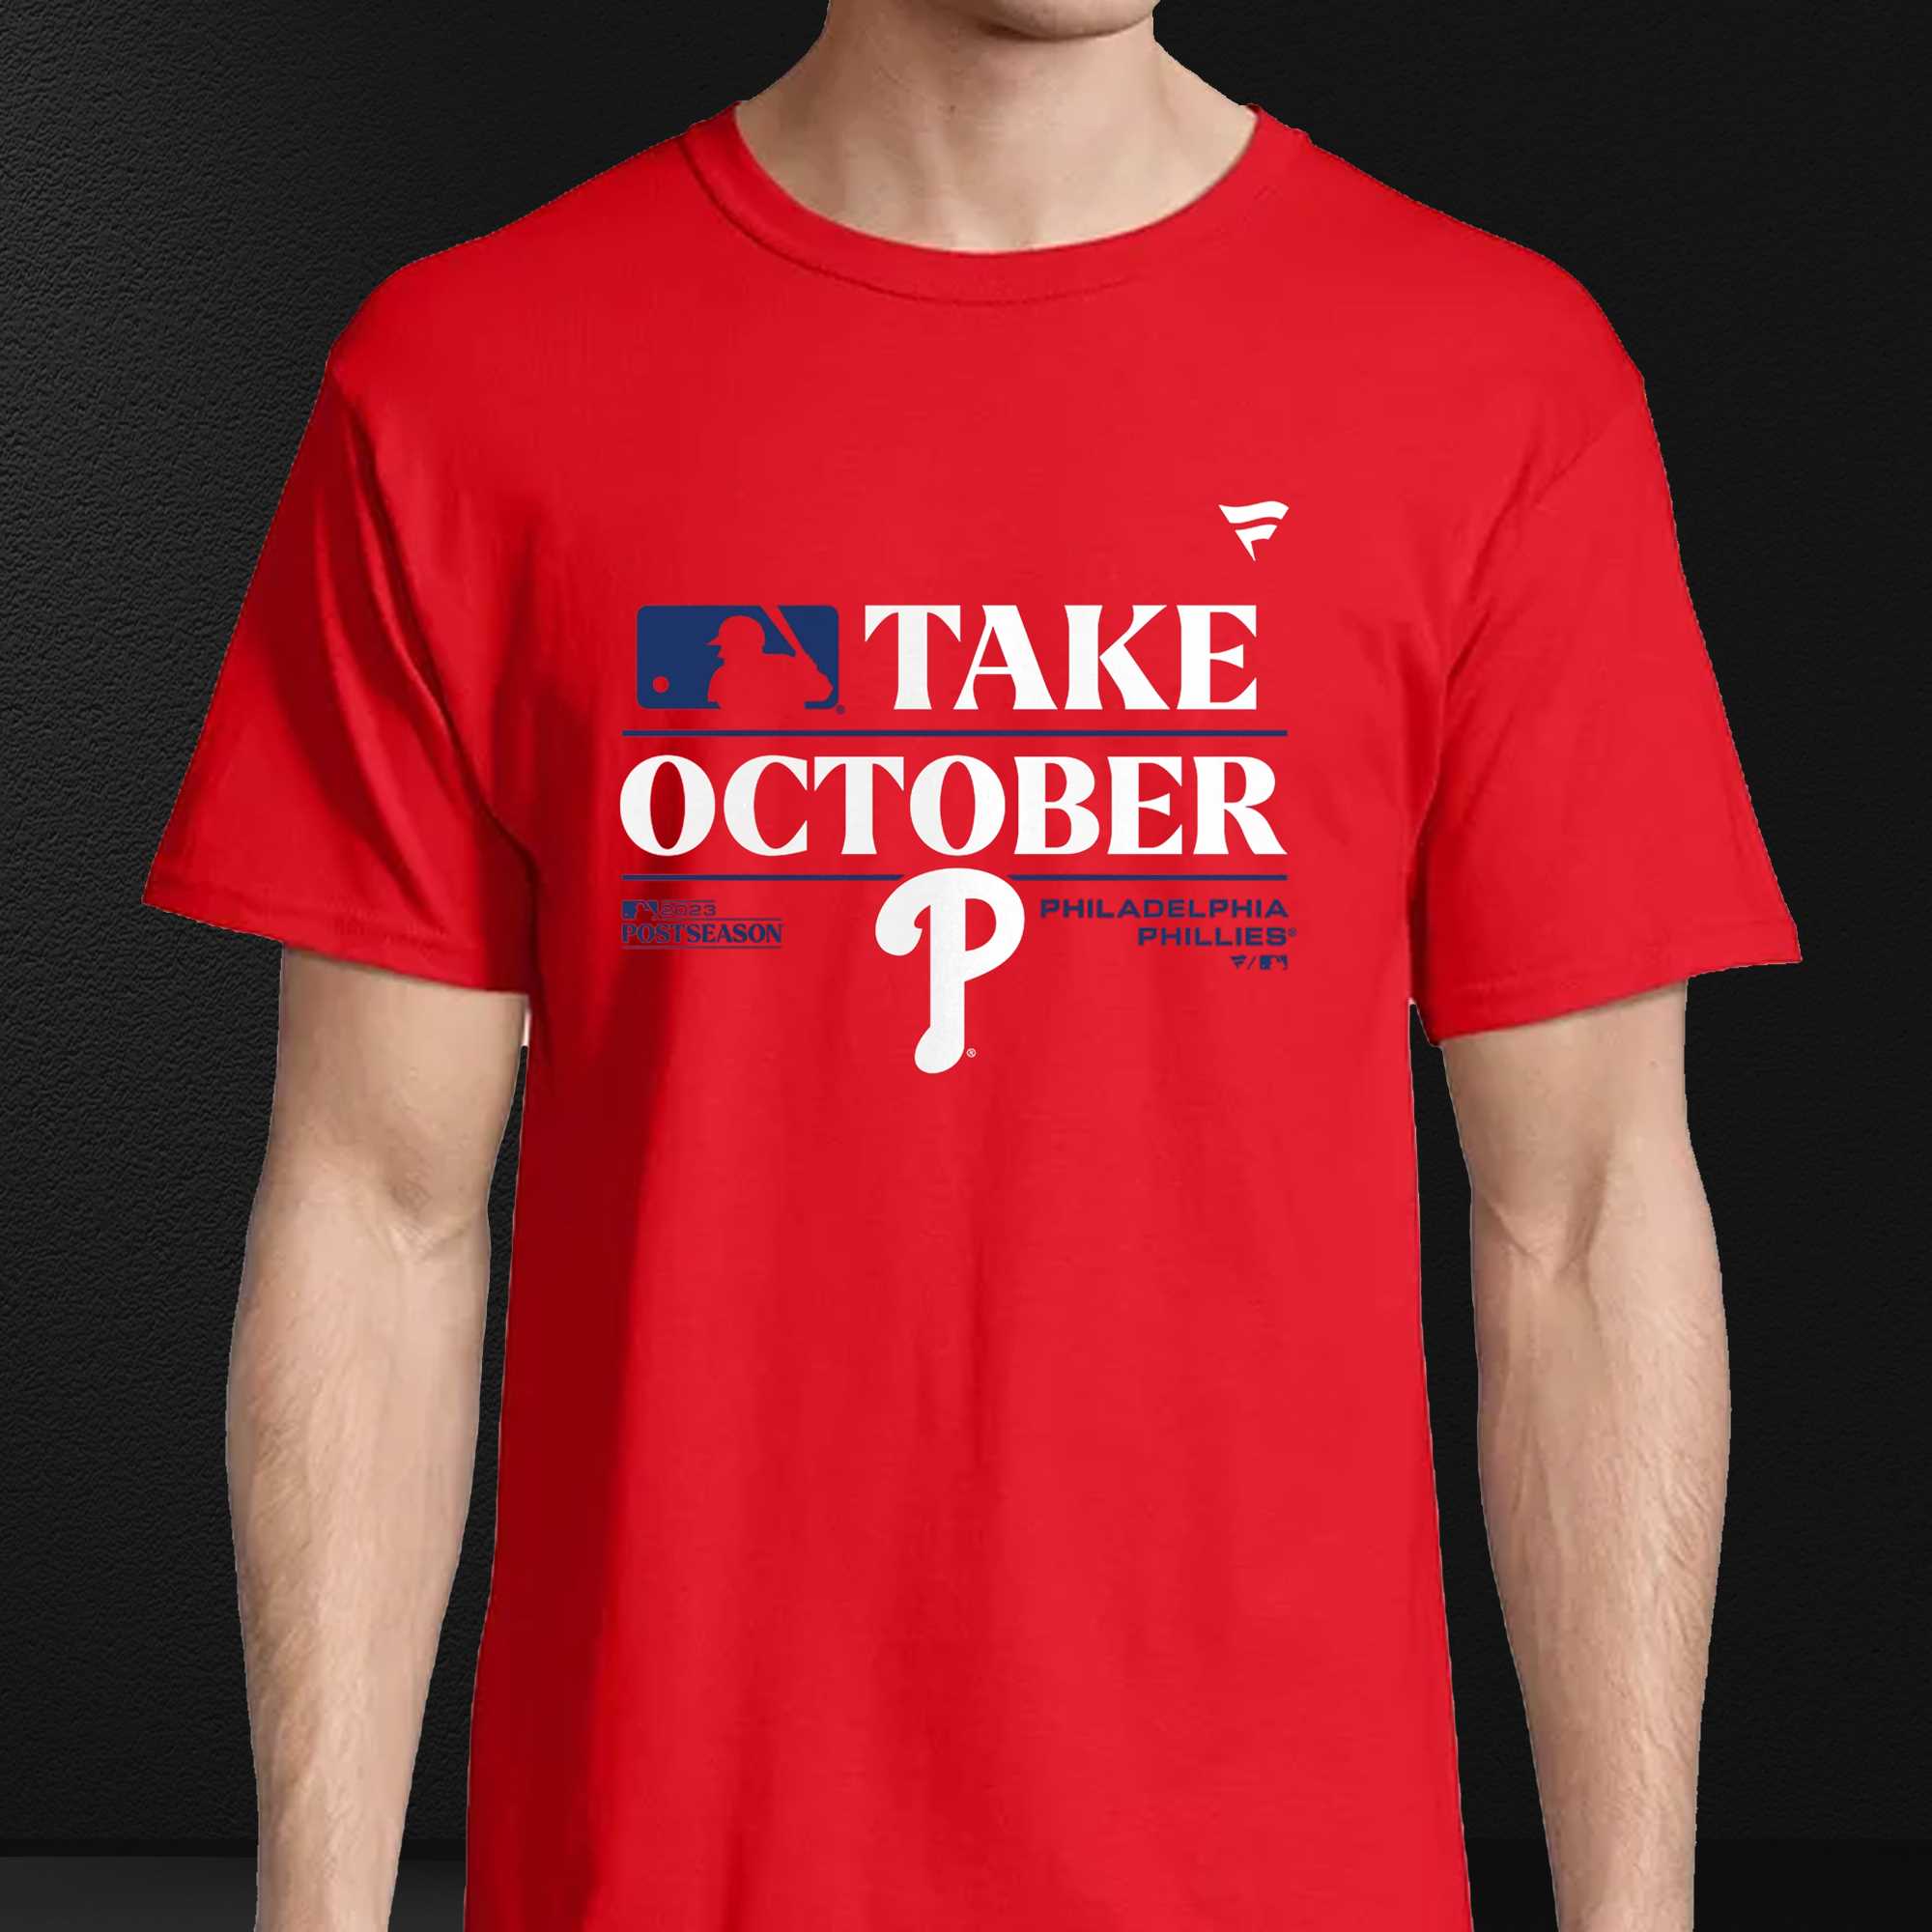 Philadelphia Phillies V Tie-Dye T-Shirt